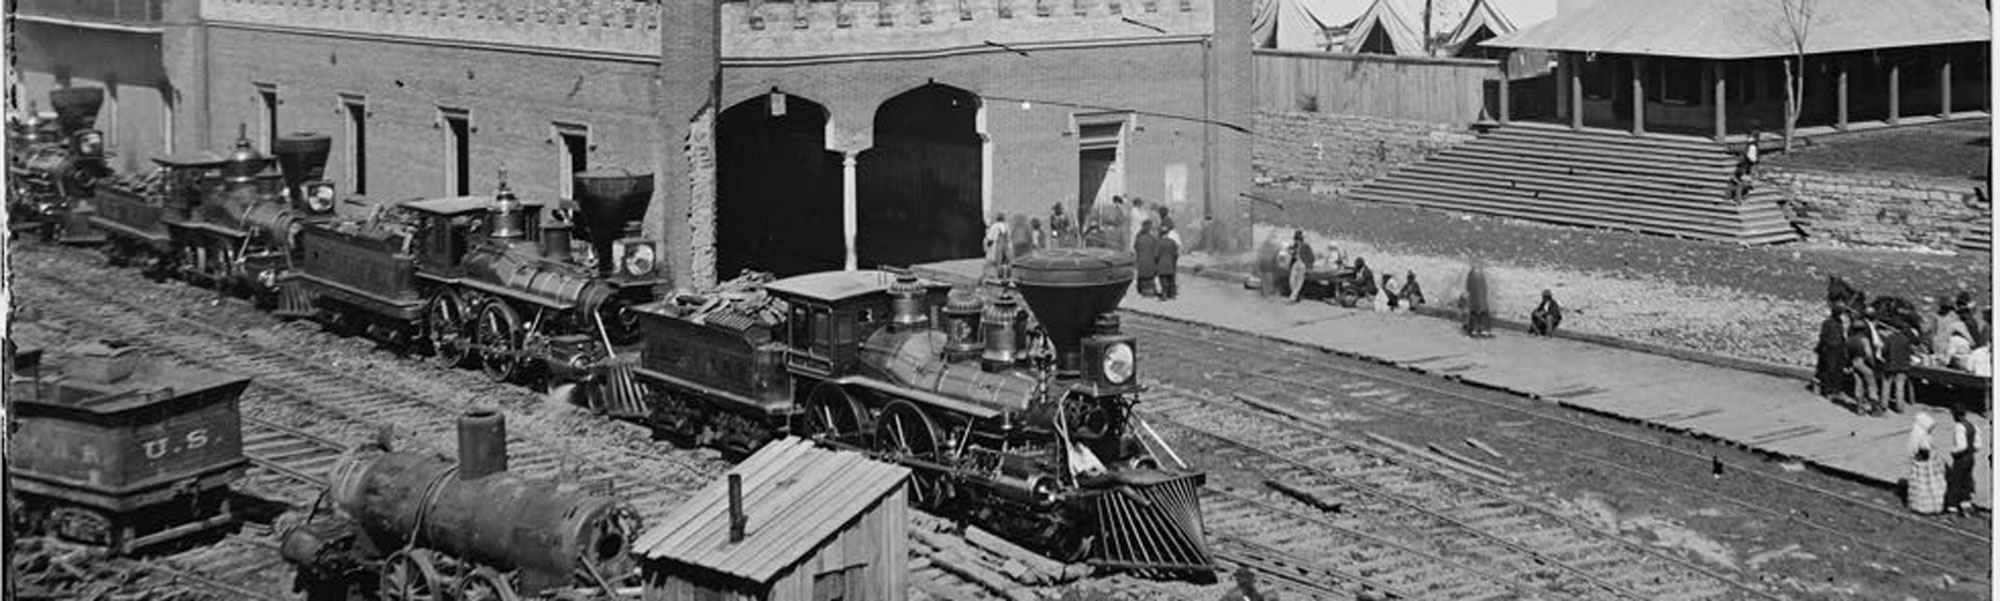 Nashville, Tenn. Railyard during the Civil War.